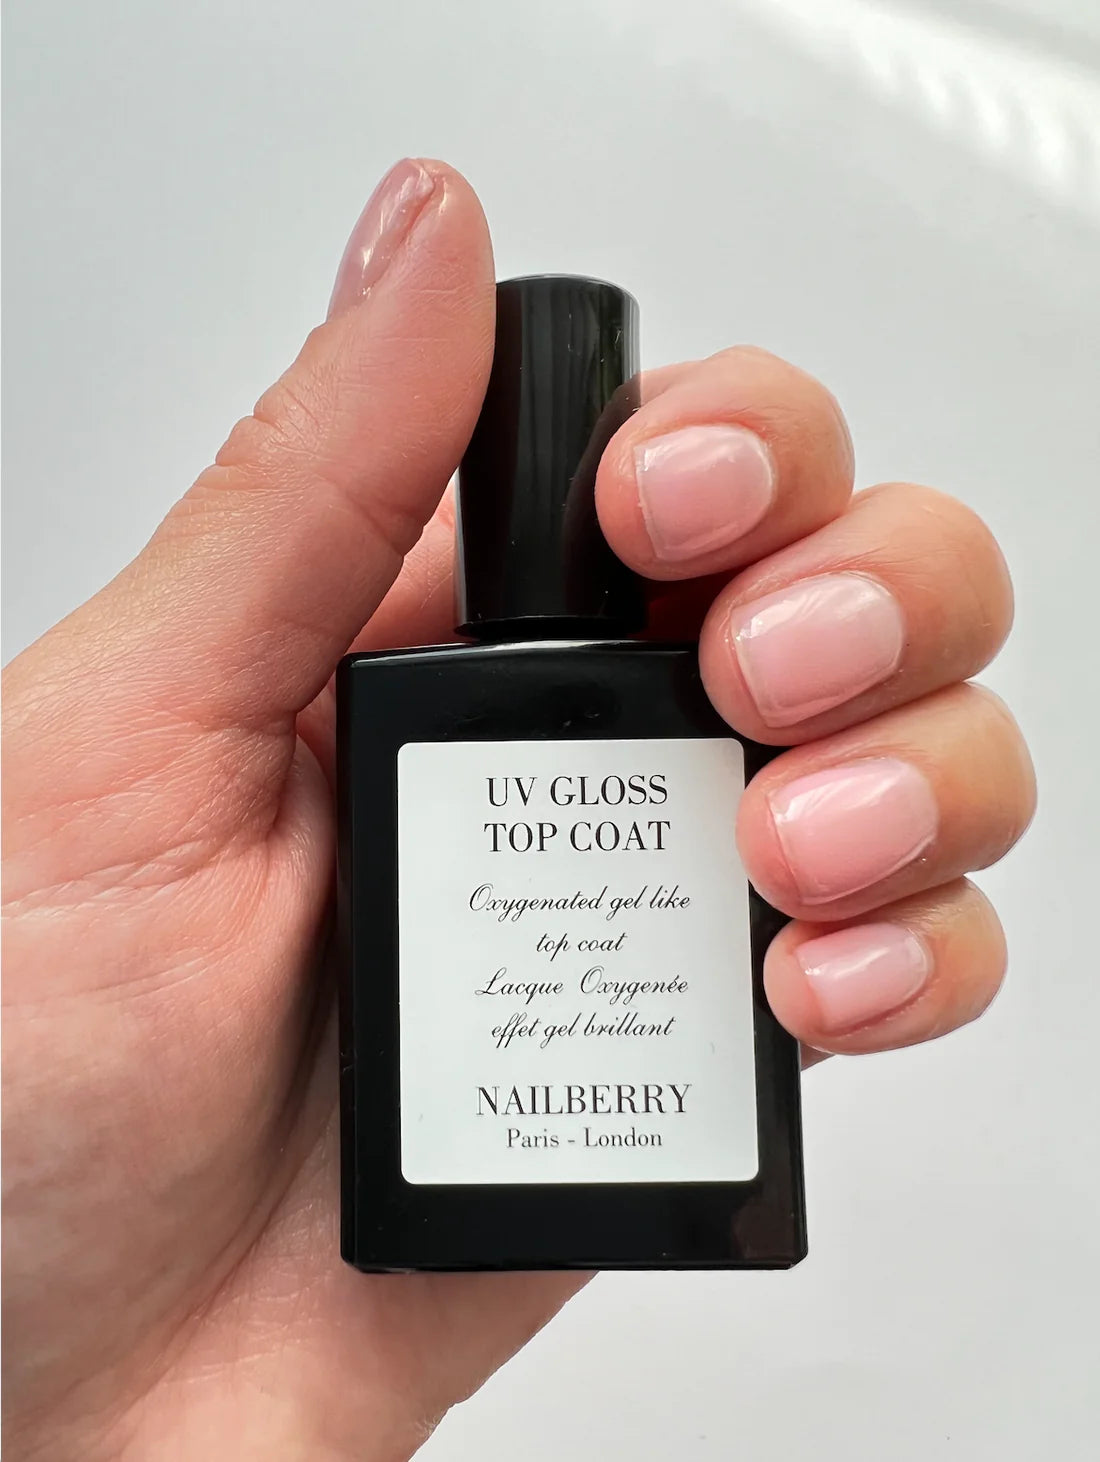 Nailberry - Uv gloss top coat